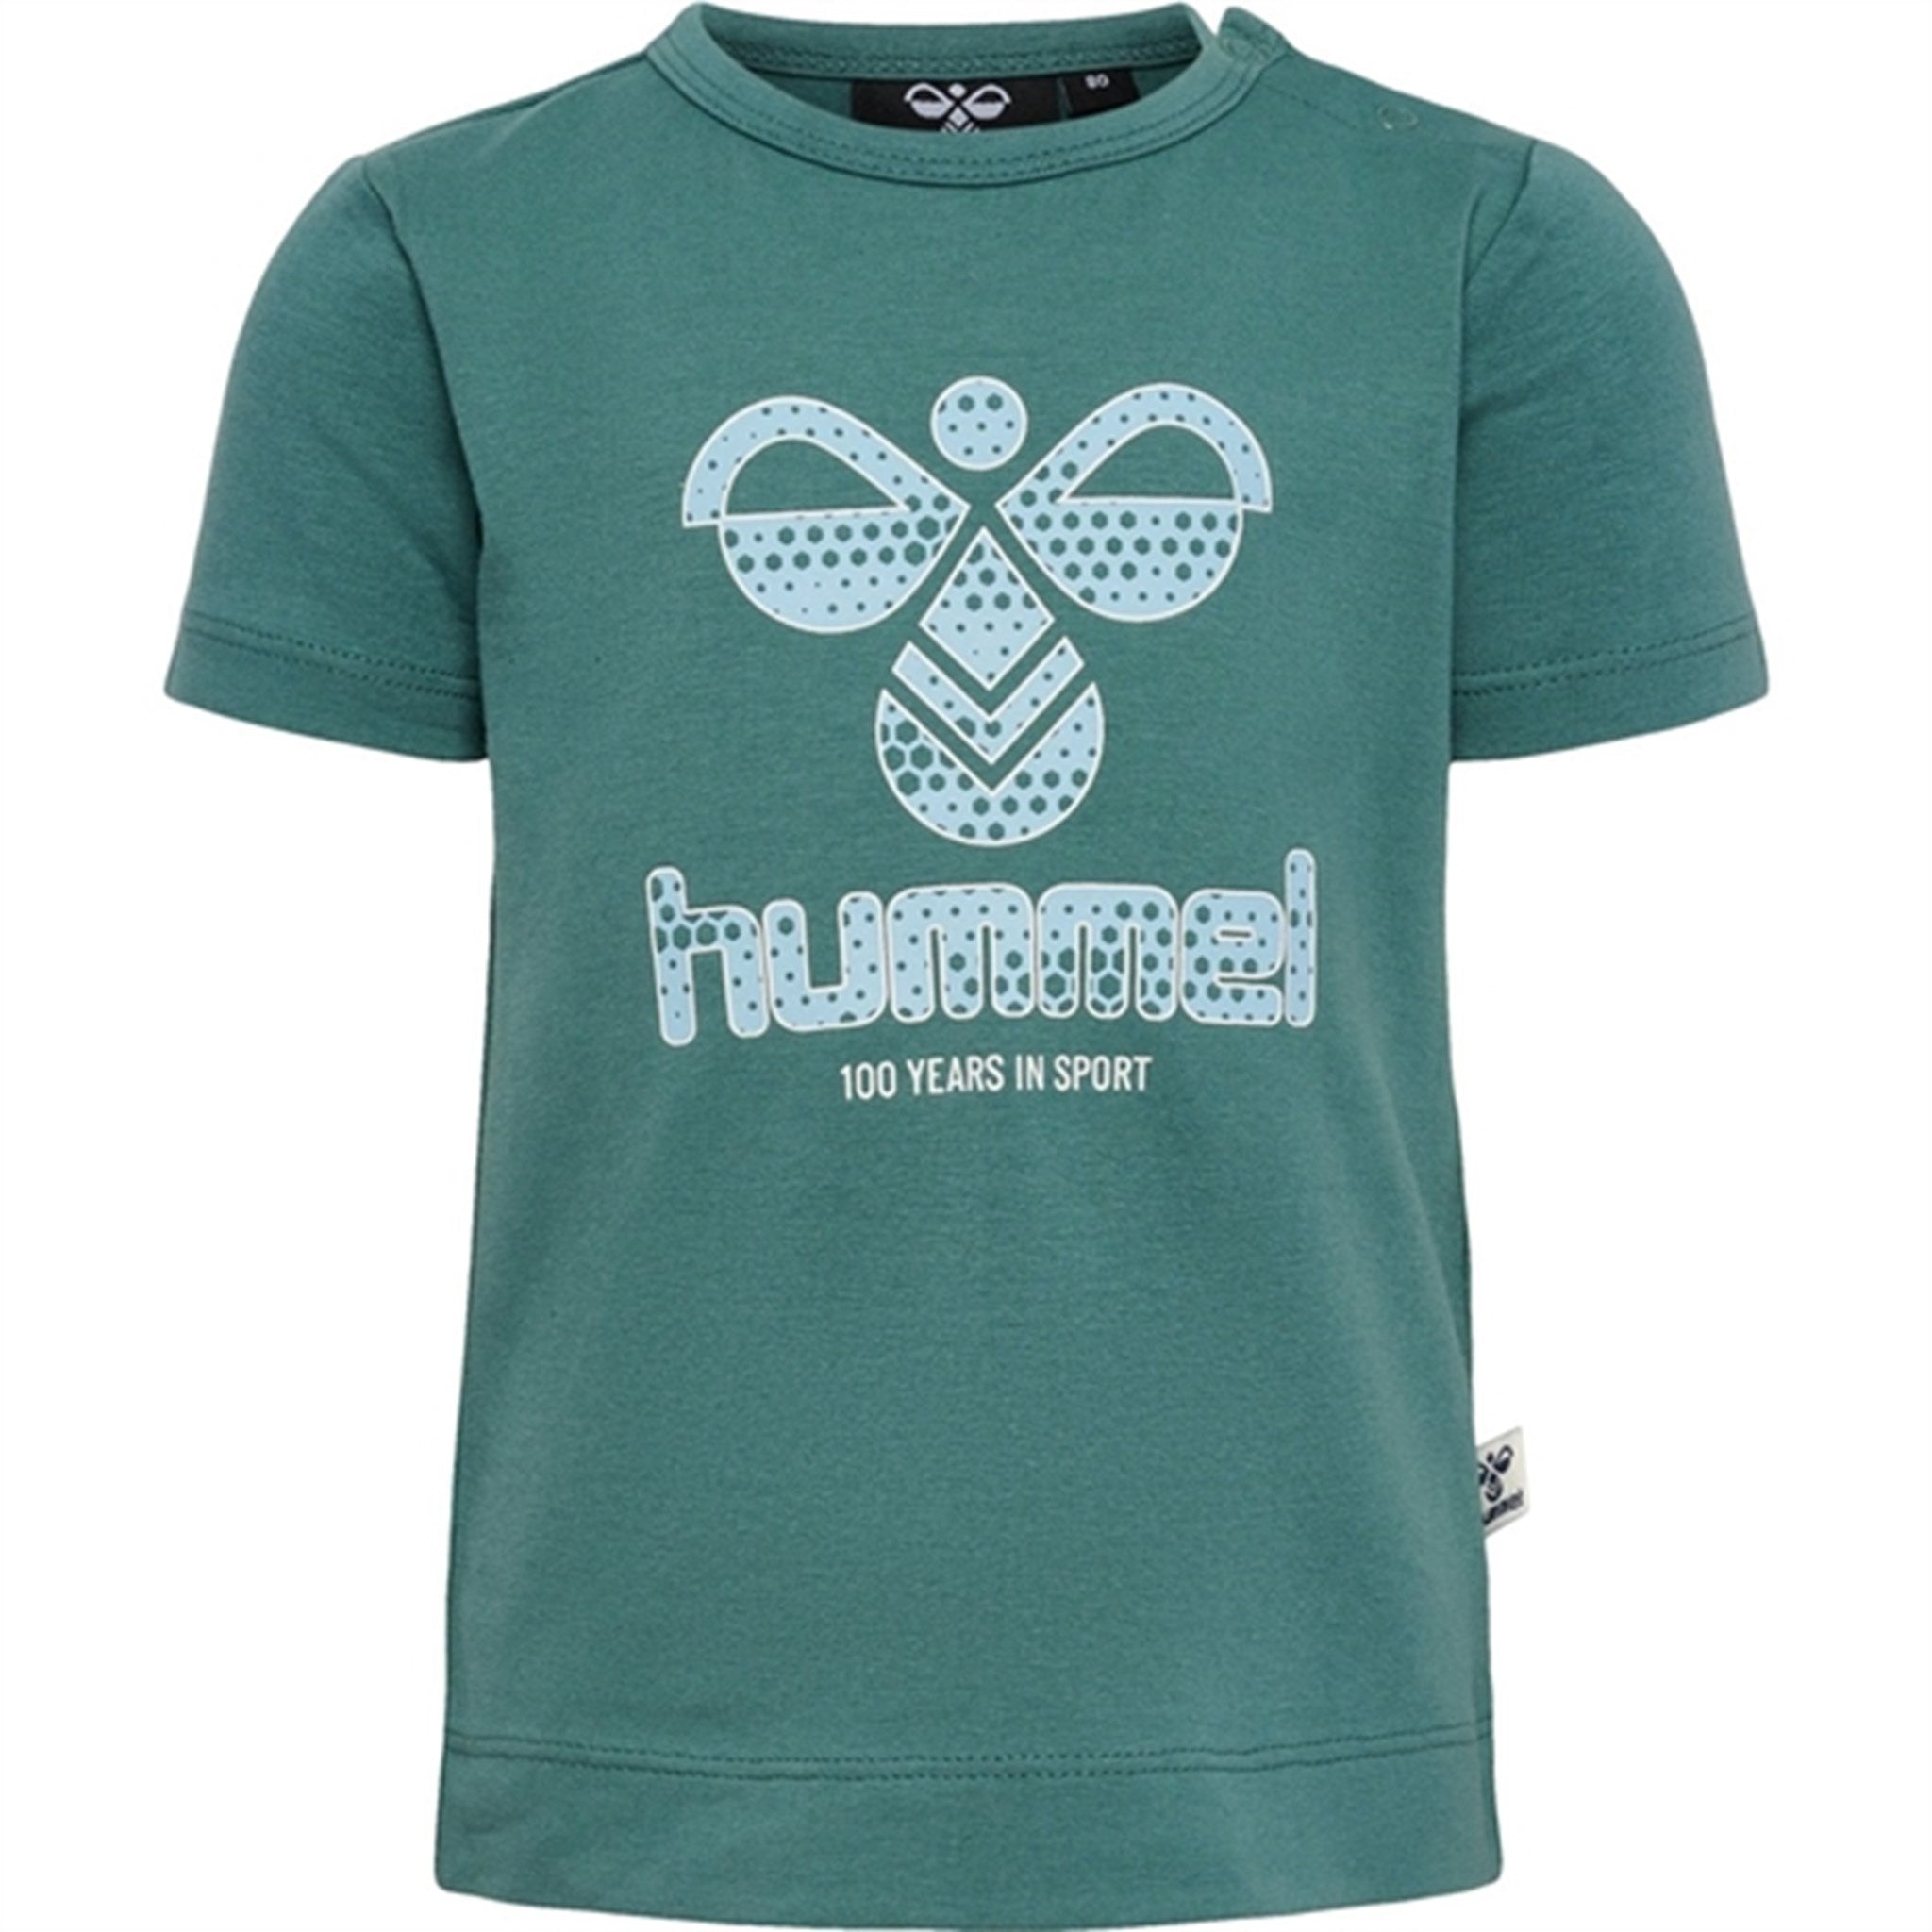 Hummel Sea Pine Azur T-shirt S/S